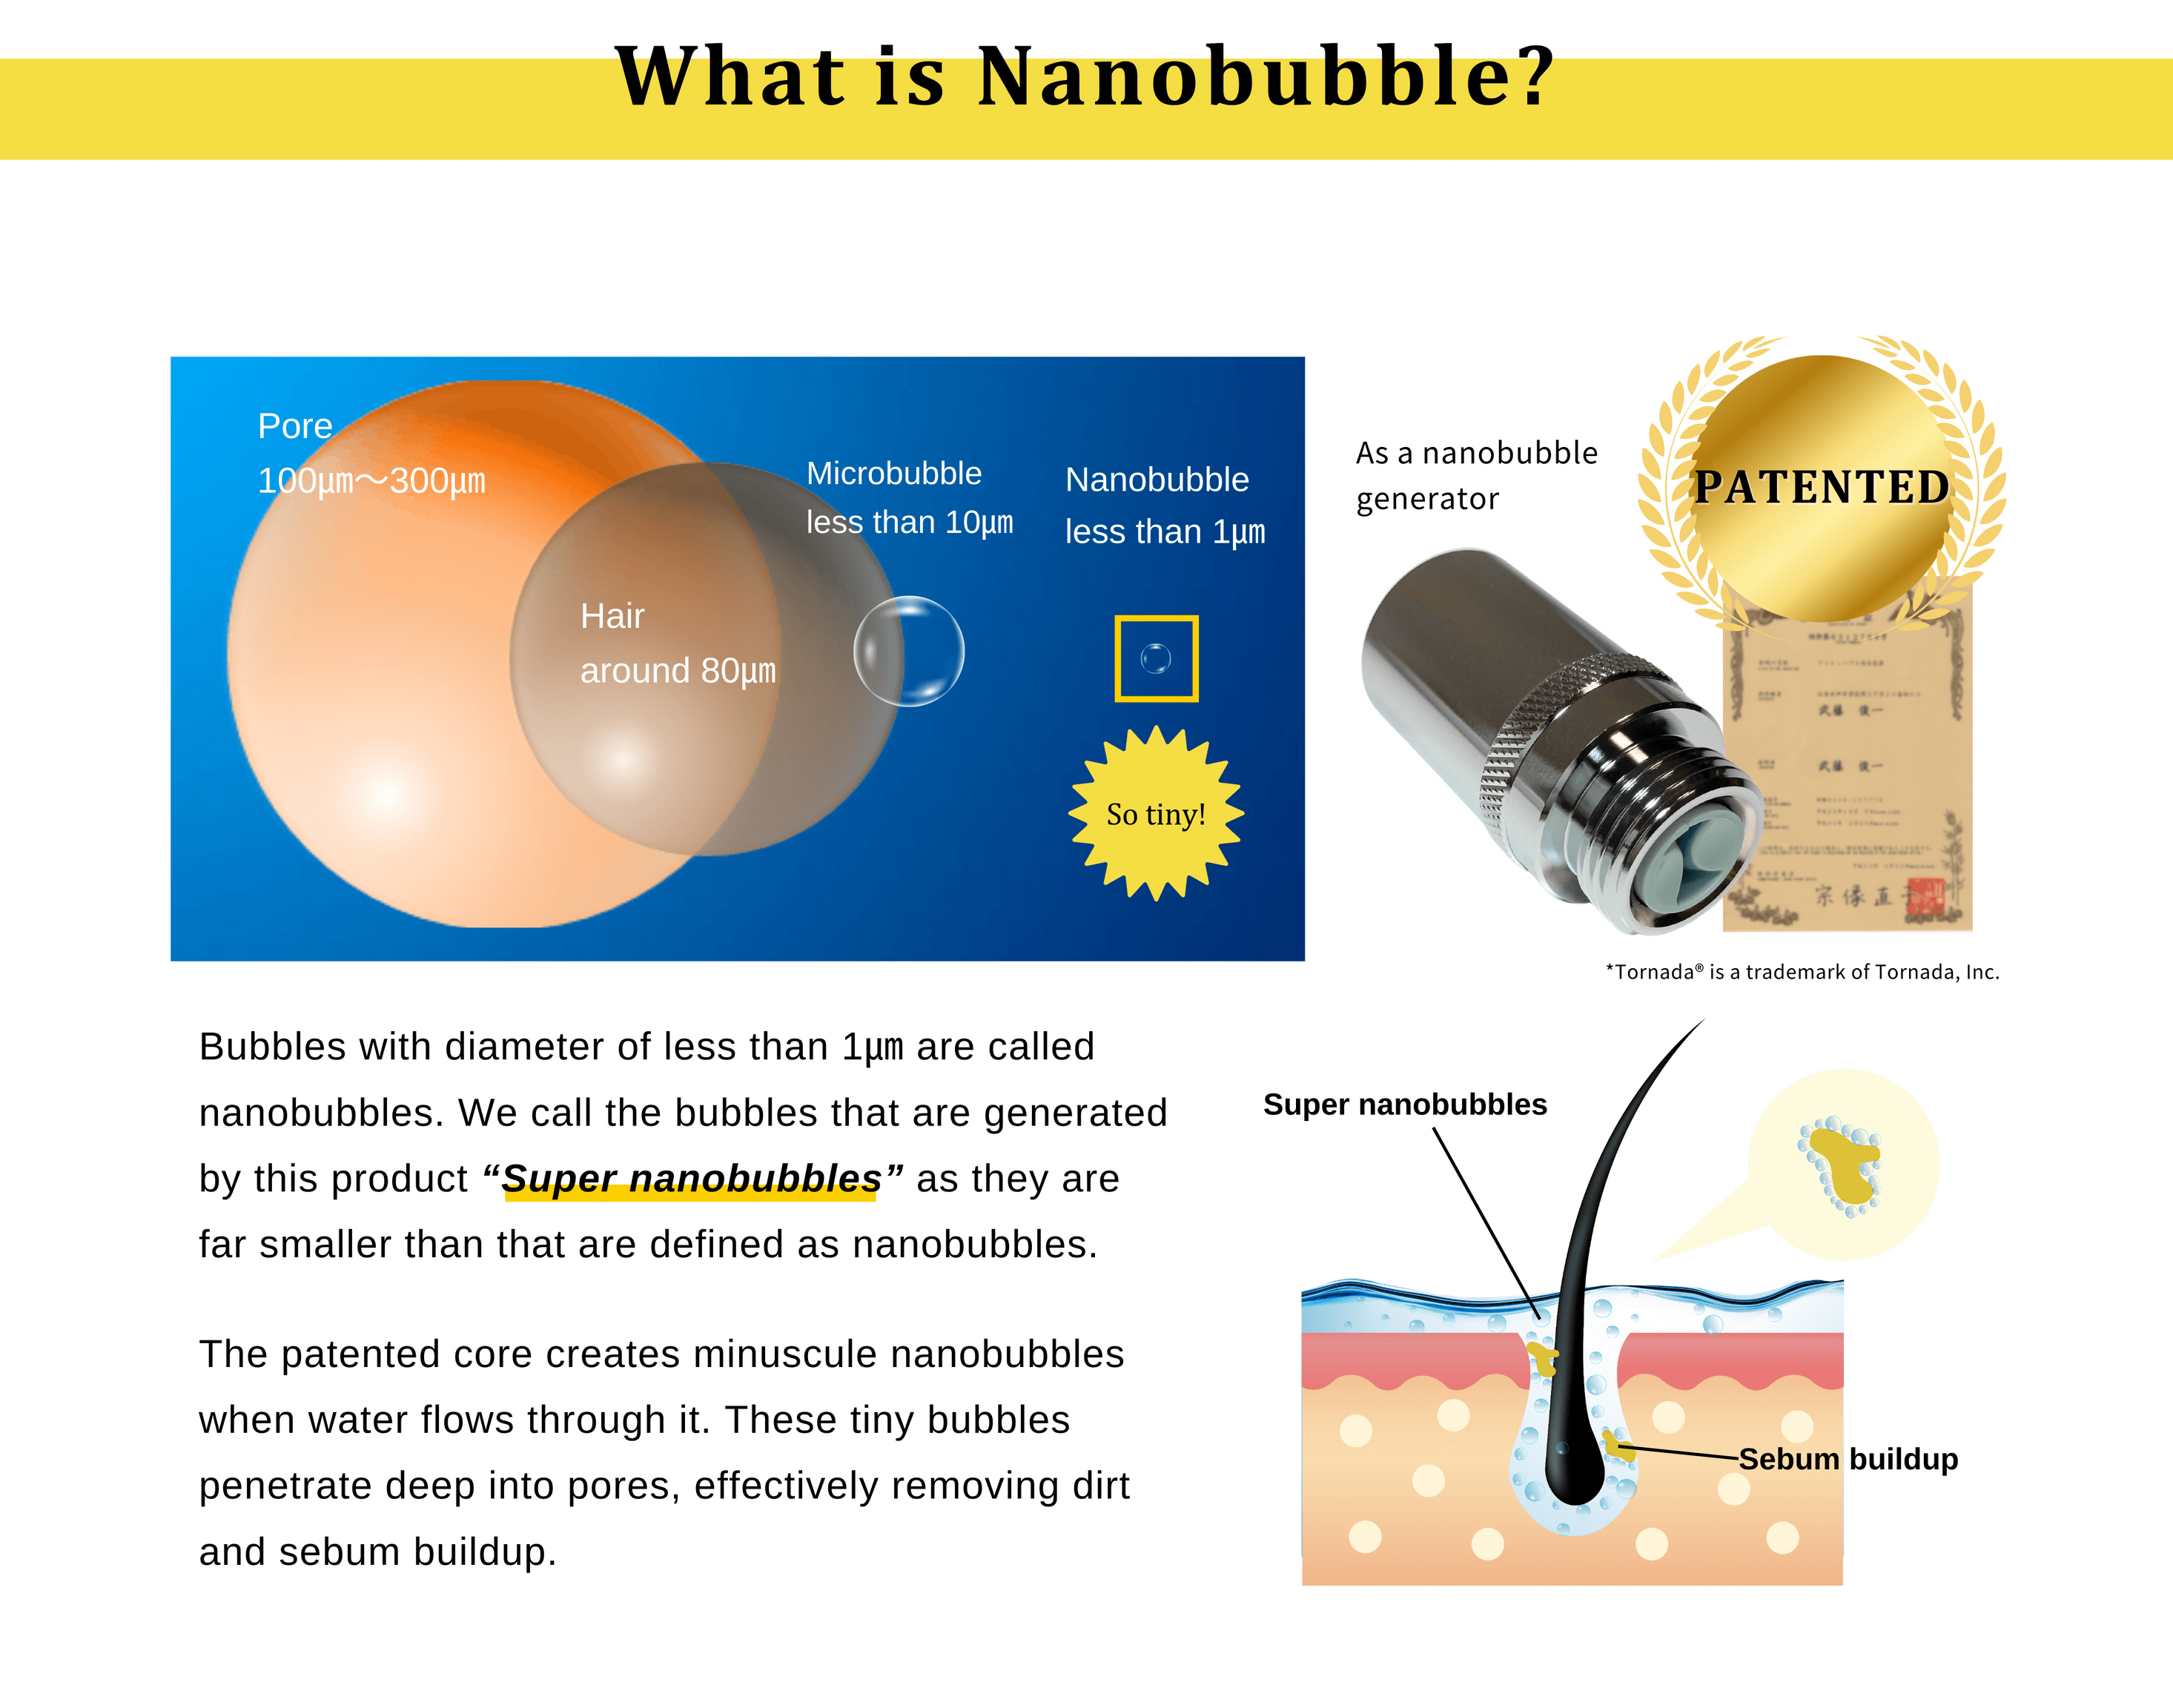 The patented core creates minuscule nanobubbles when water flows through it. Nanobubbles penetrate deep into pores, removing dirt.